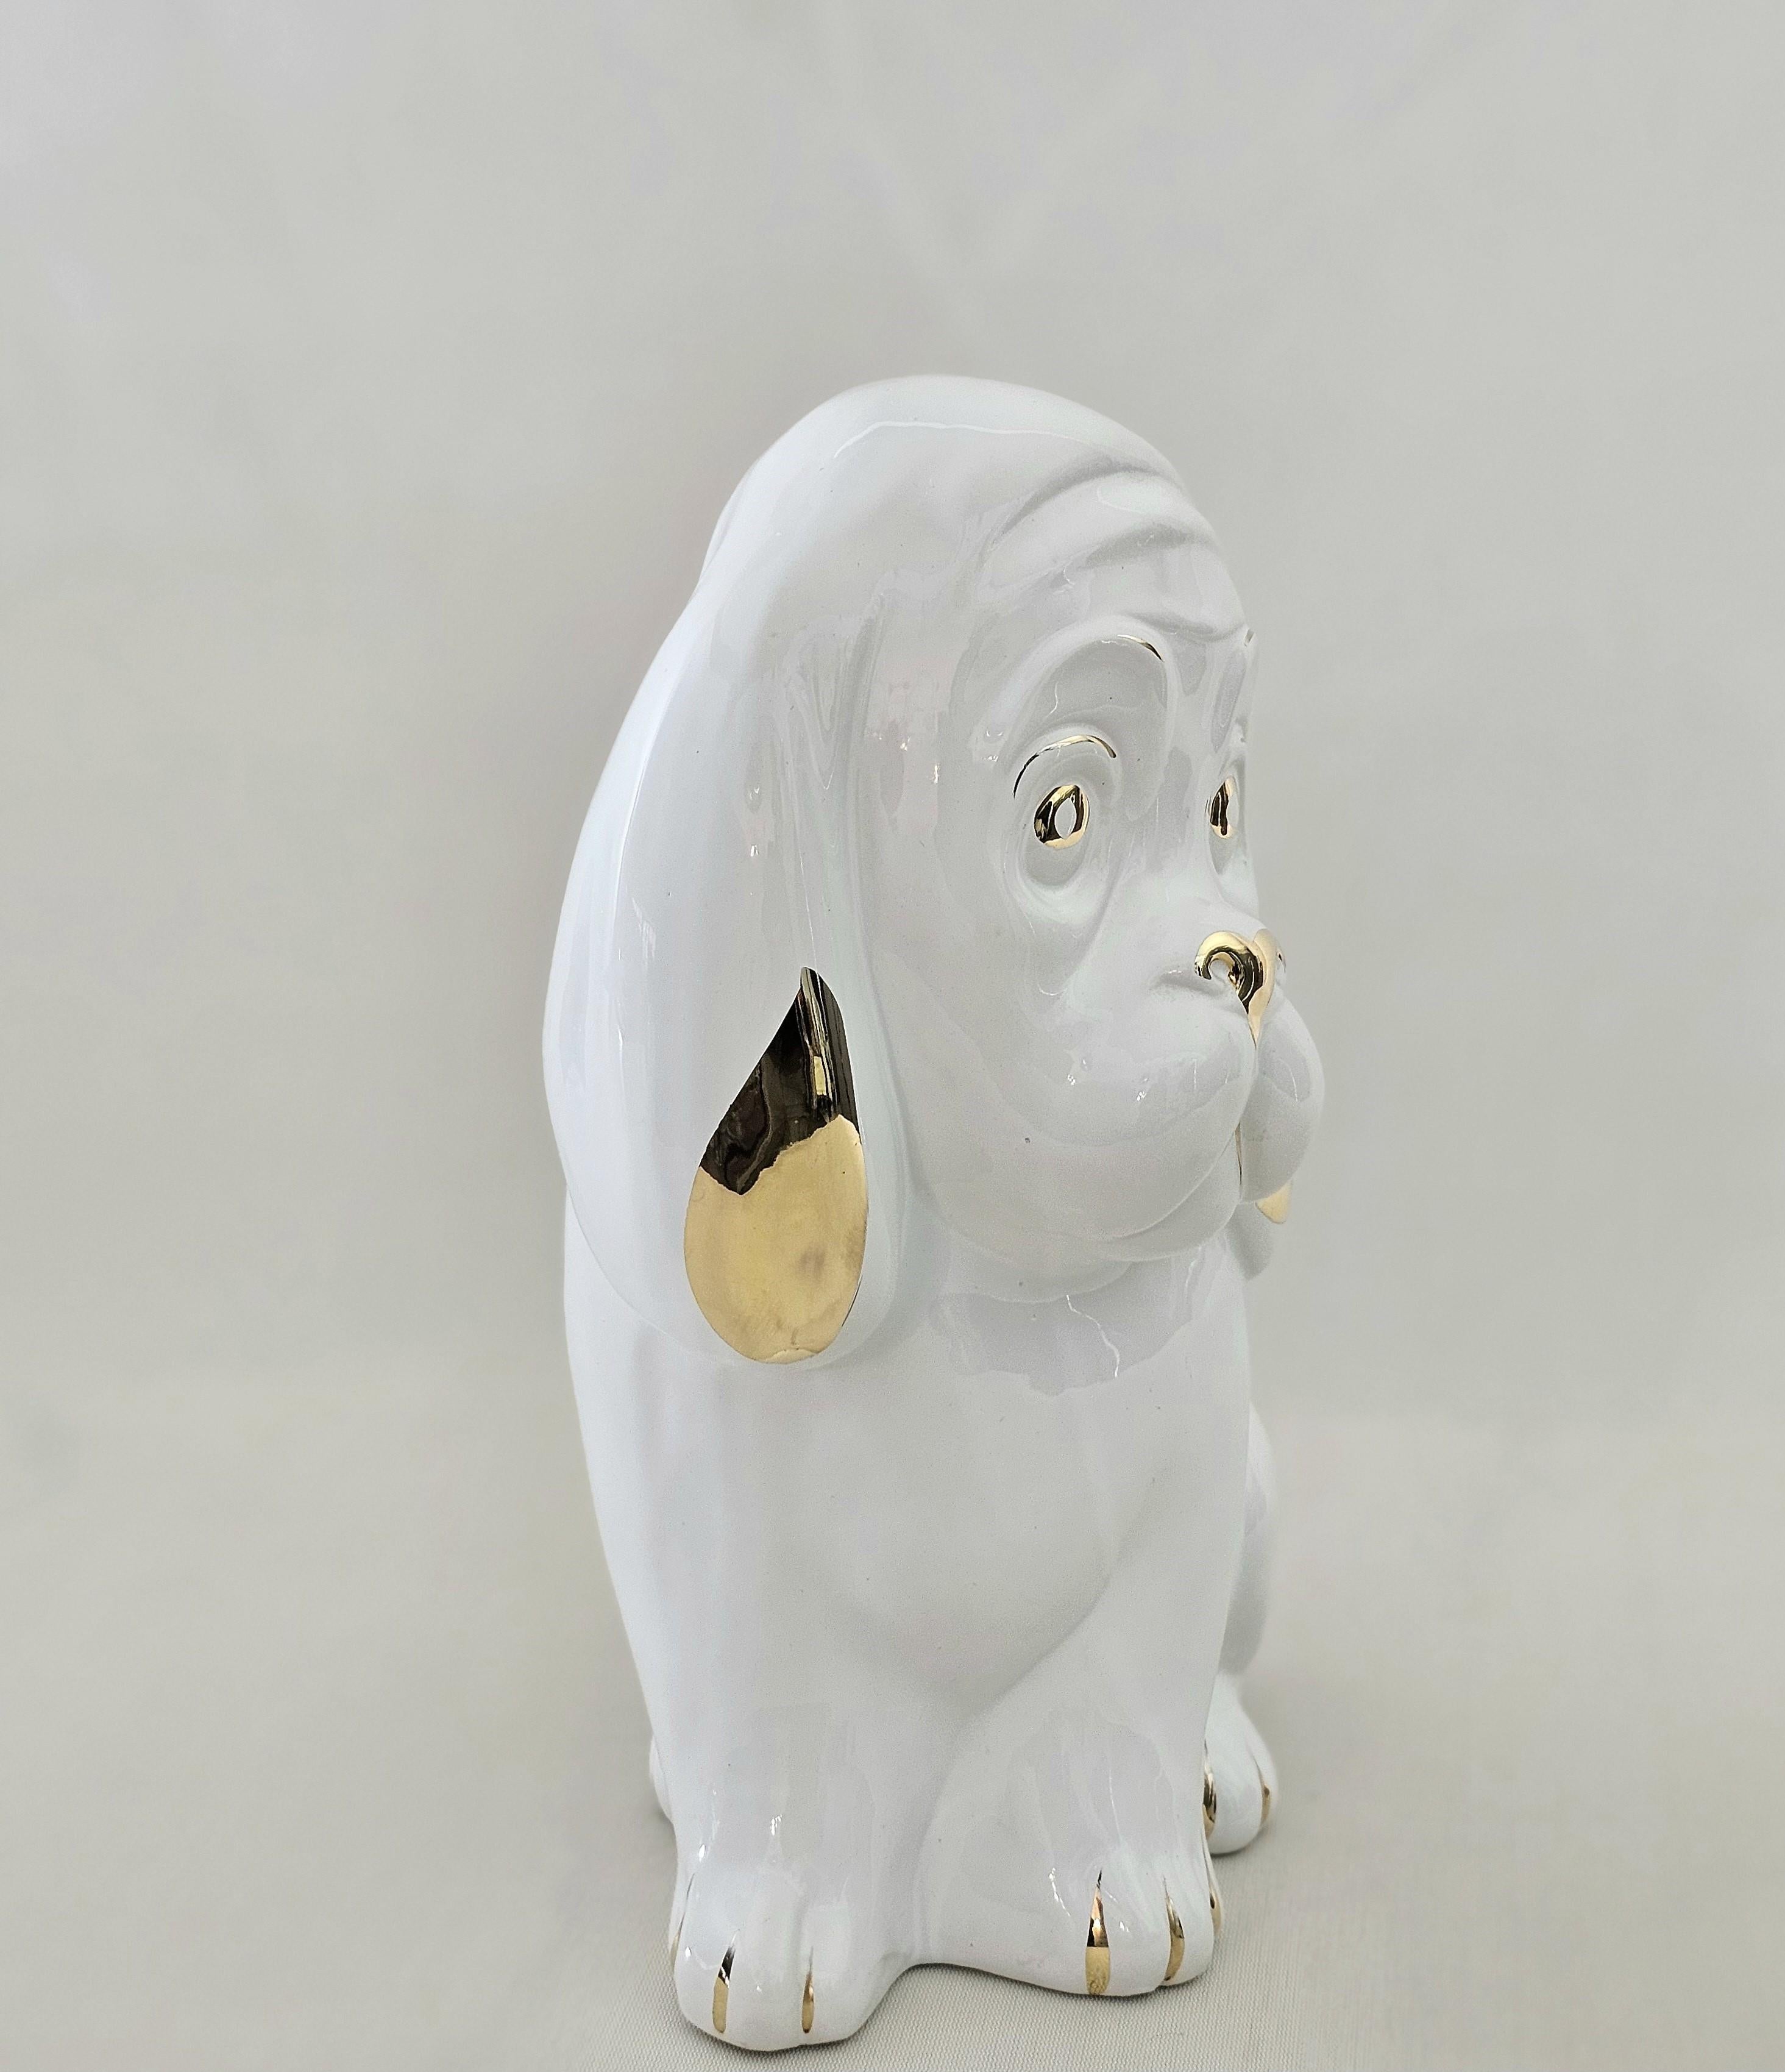 Decorative Object Dog Porcelain Sculpture Midcentury Modern Italian Design 1970s For Sale 1